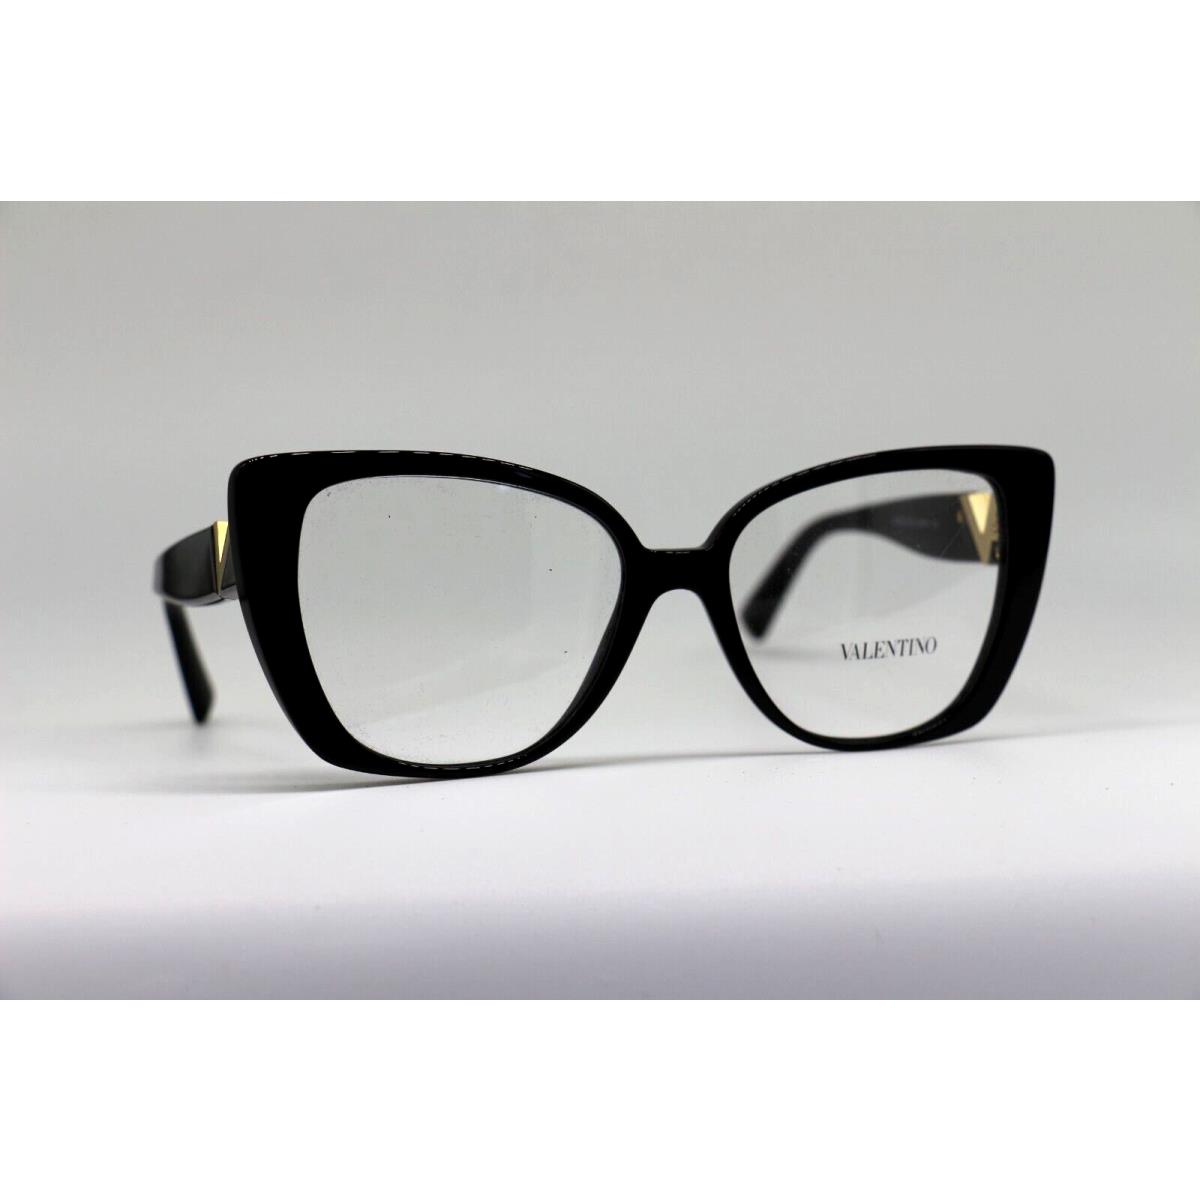 Valentino eyeglasses Giorgio Armani - Black Frame 1